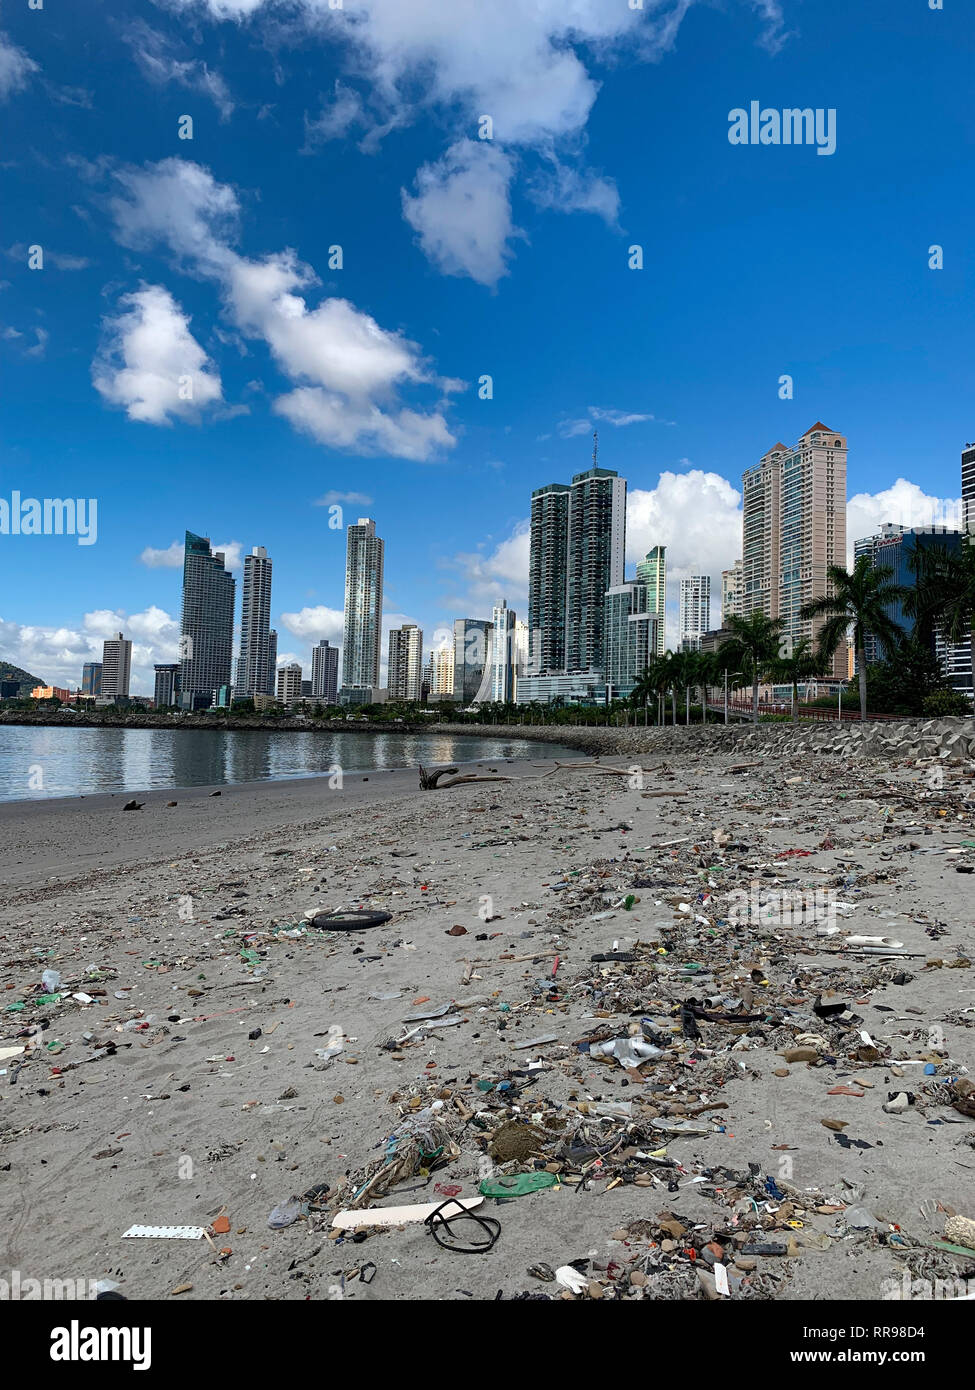 Trash dragged by the tides at Sidewalk (Cinta Costera) in public park at ocean Promenade and skyline background in Panama City ( Avenida Balboa), Pana Stock Photo